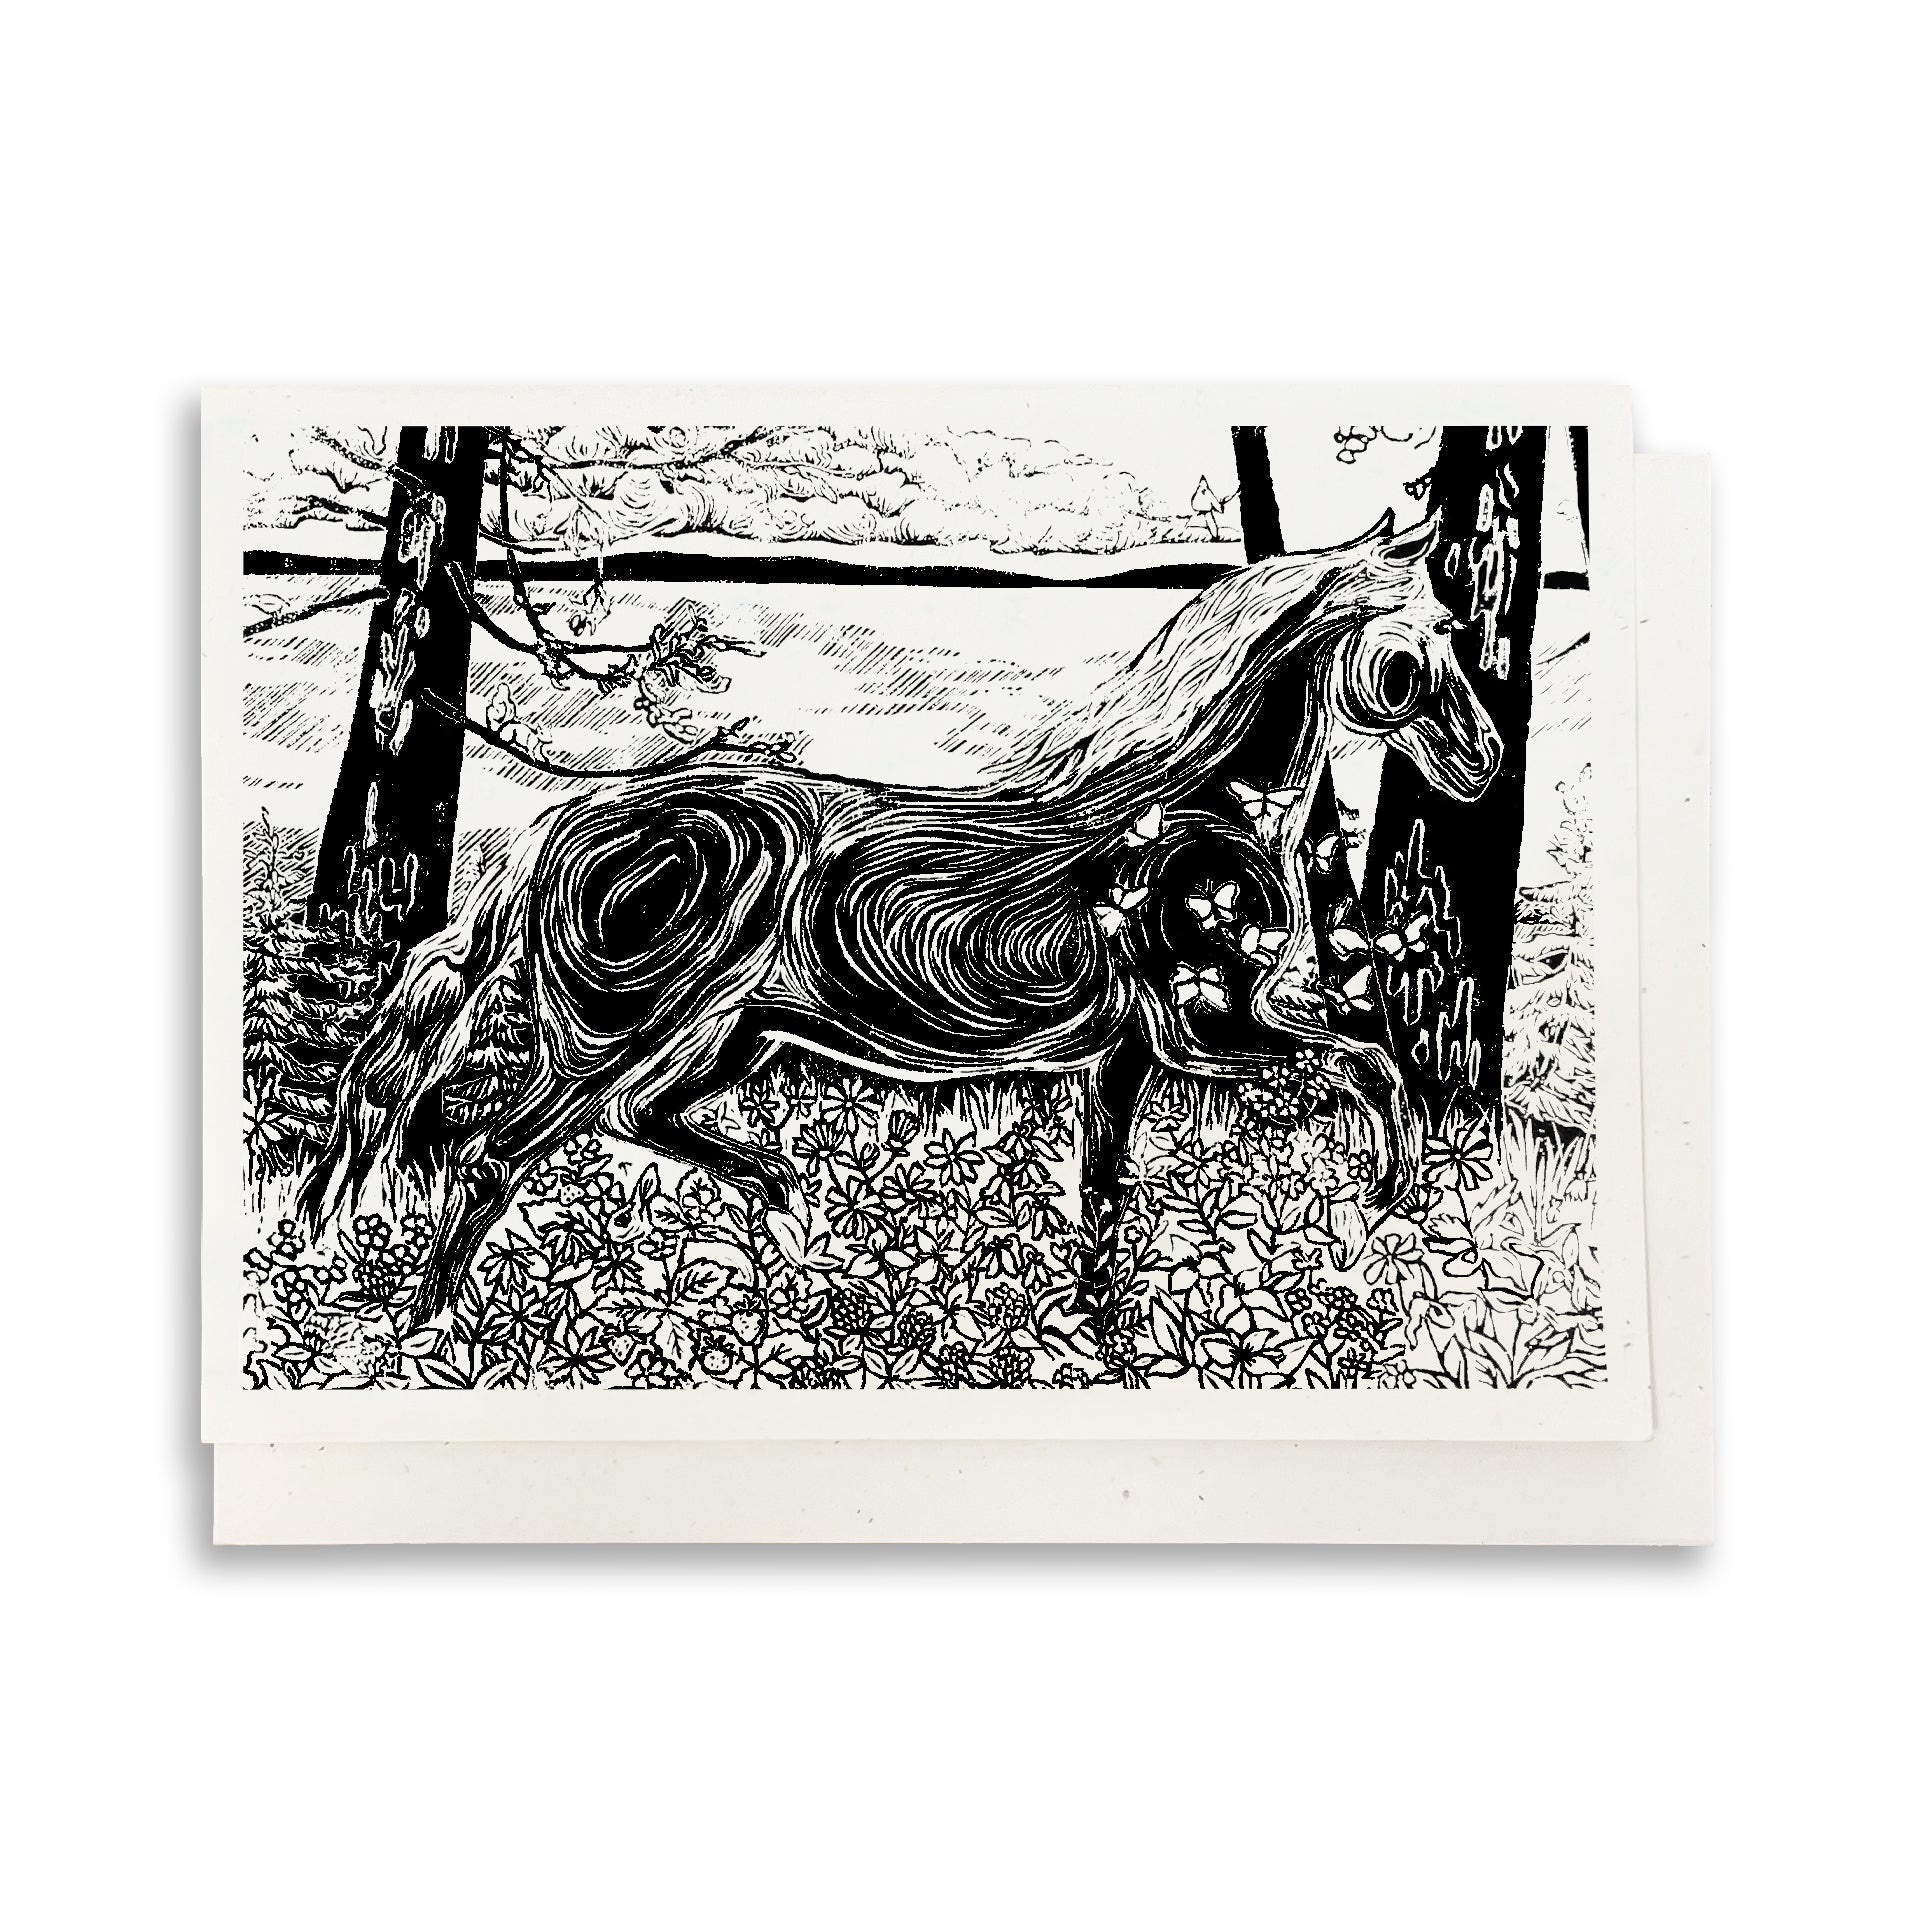 Morning Frolic horse greeting card by Natalia Wohletz of Peninsula Prints.